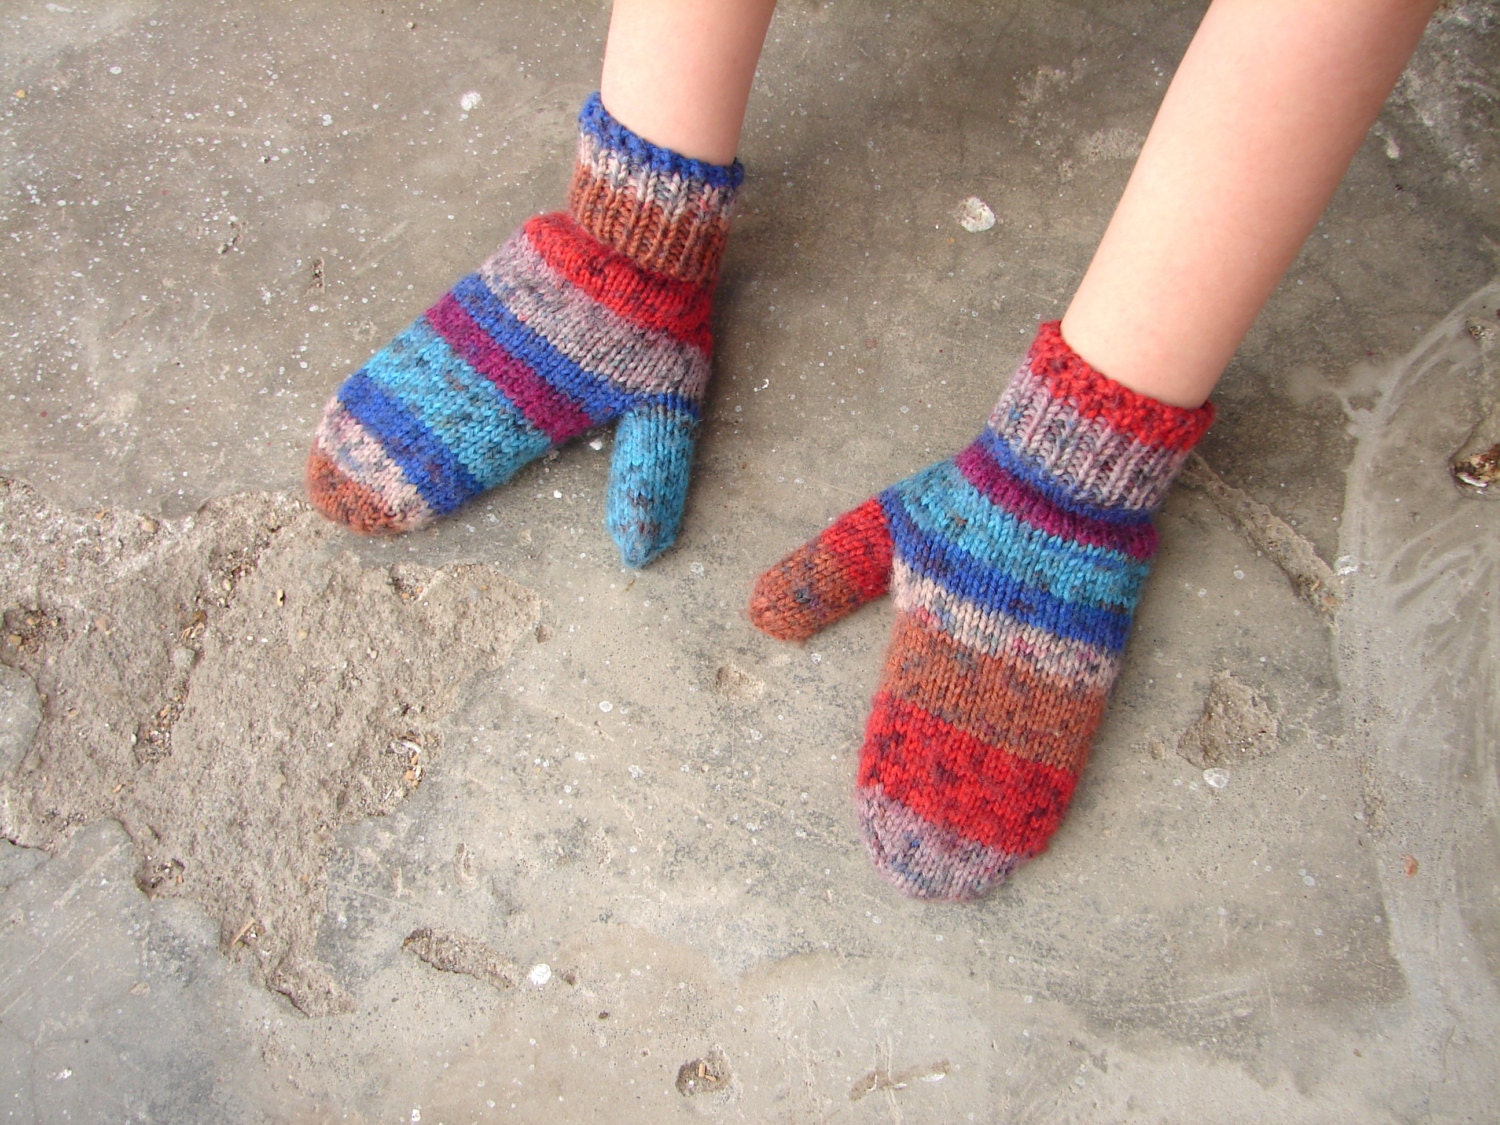 Brown Fun Warm Alpaca Striped Kids Socks Buy One Get One Half Off Red Blue 